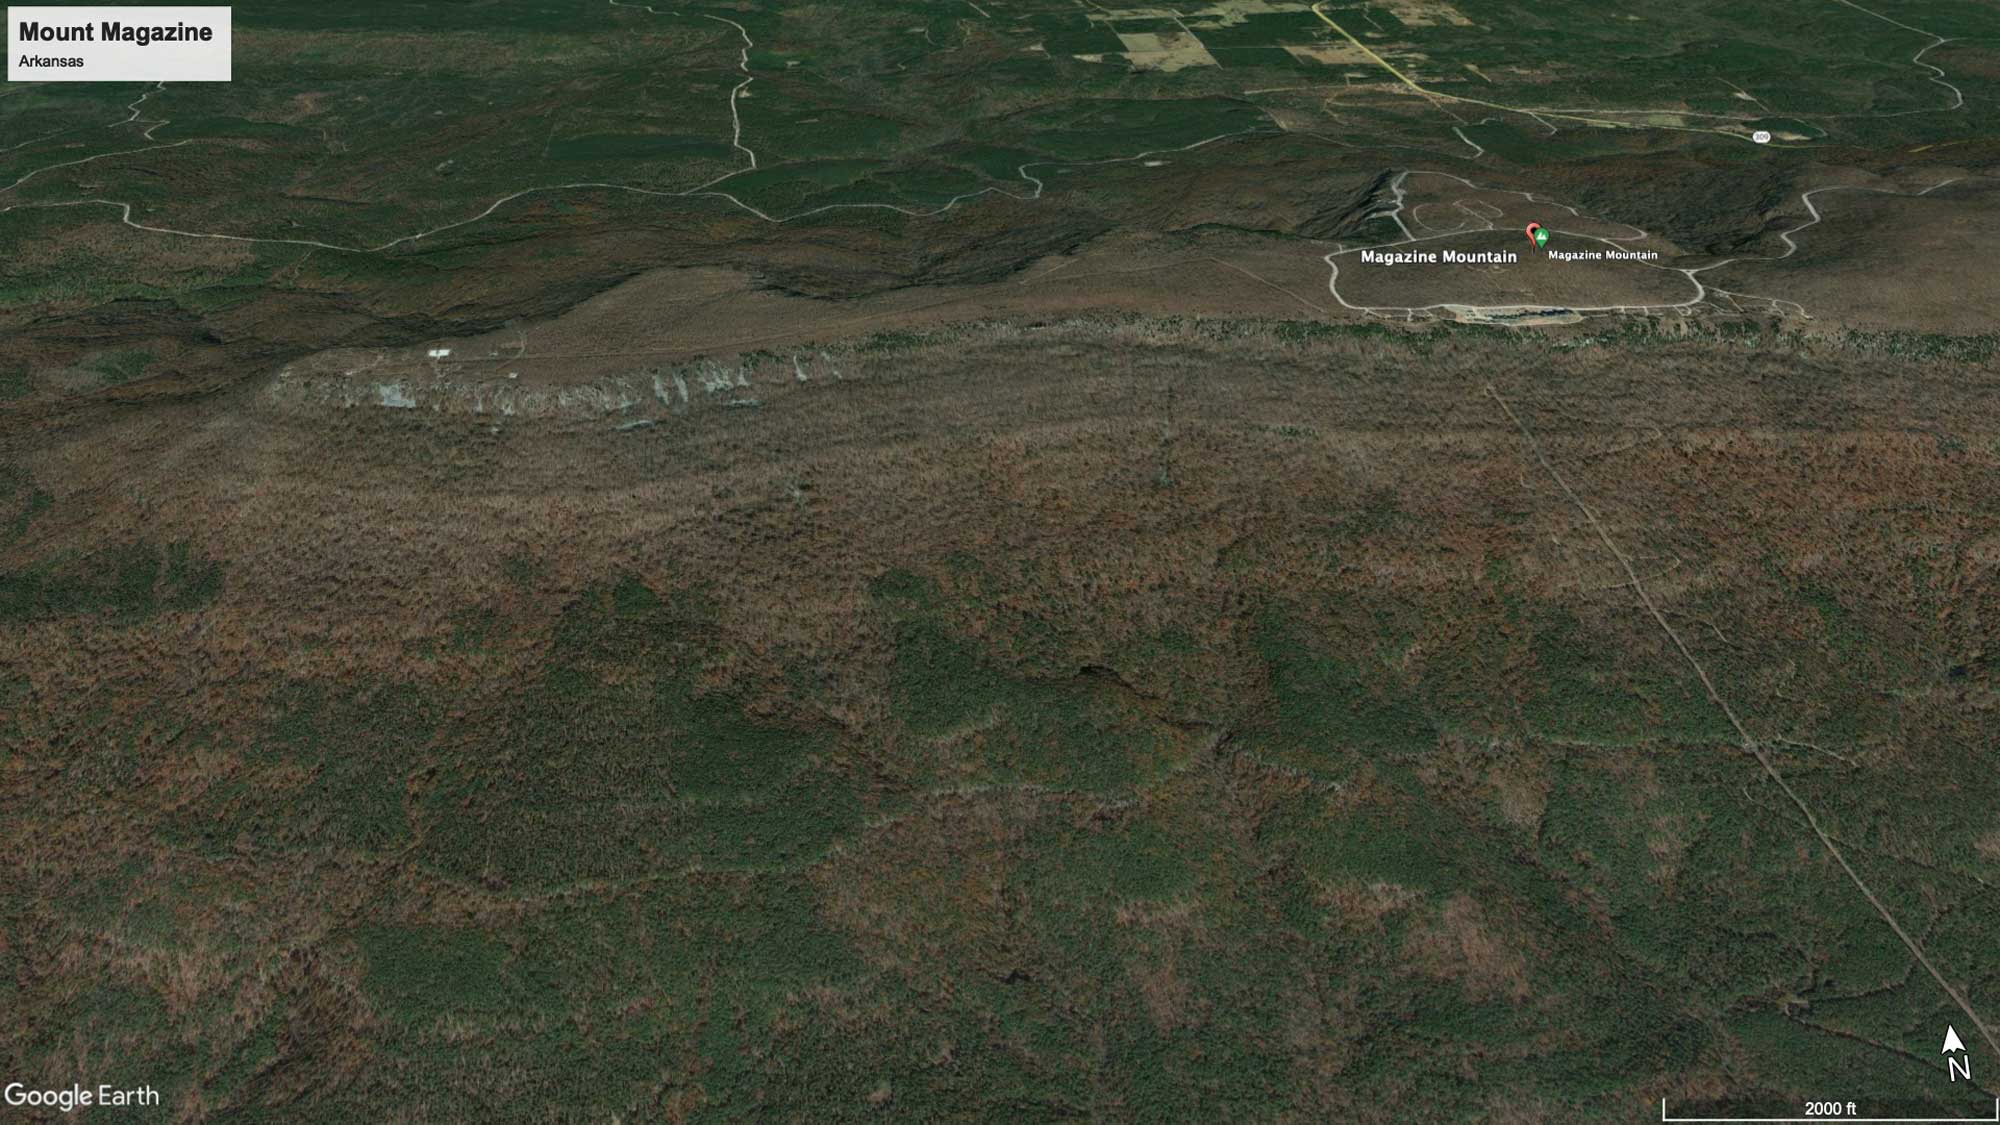 Satellite image of Mount Magazine, Arkansas.